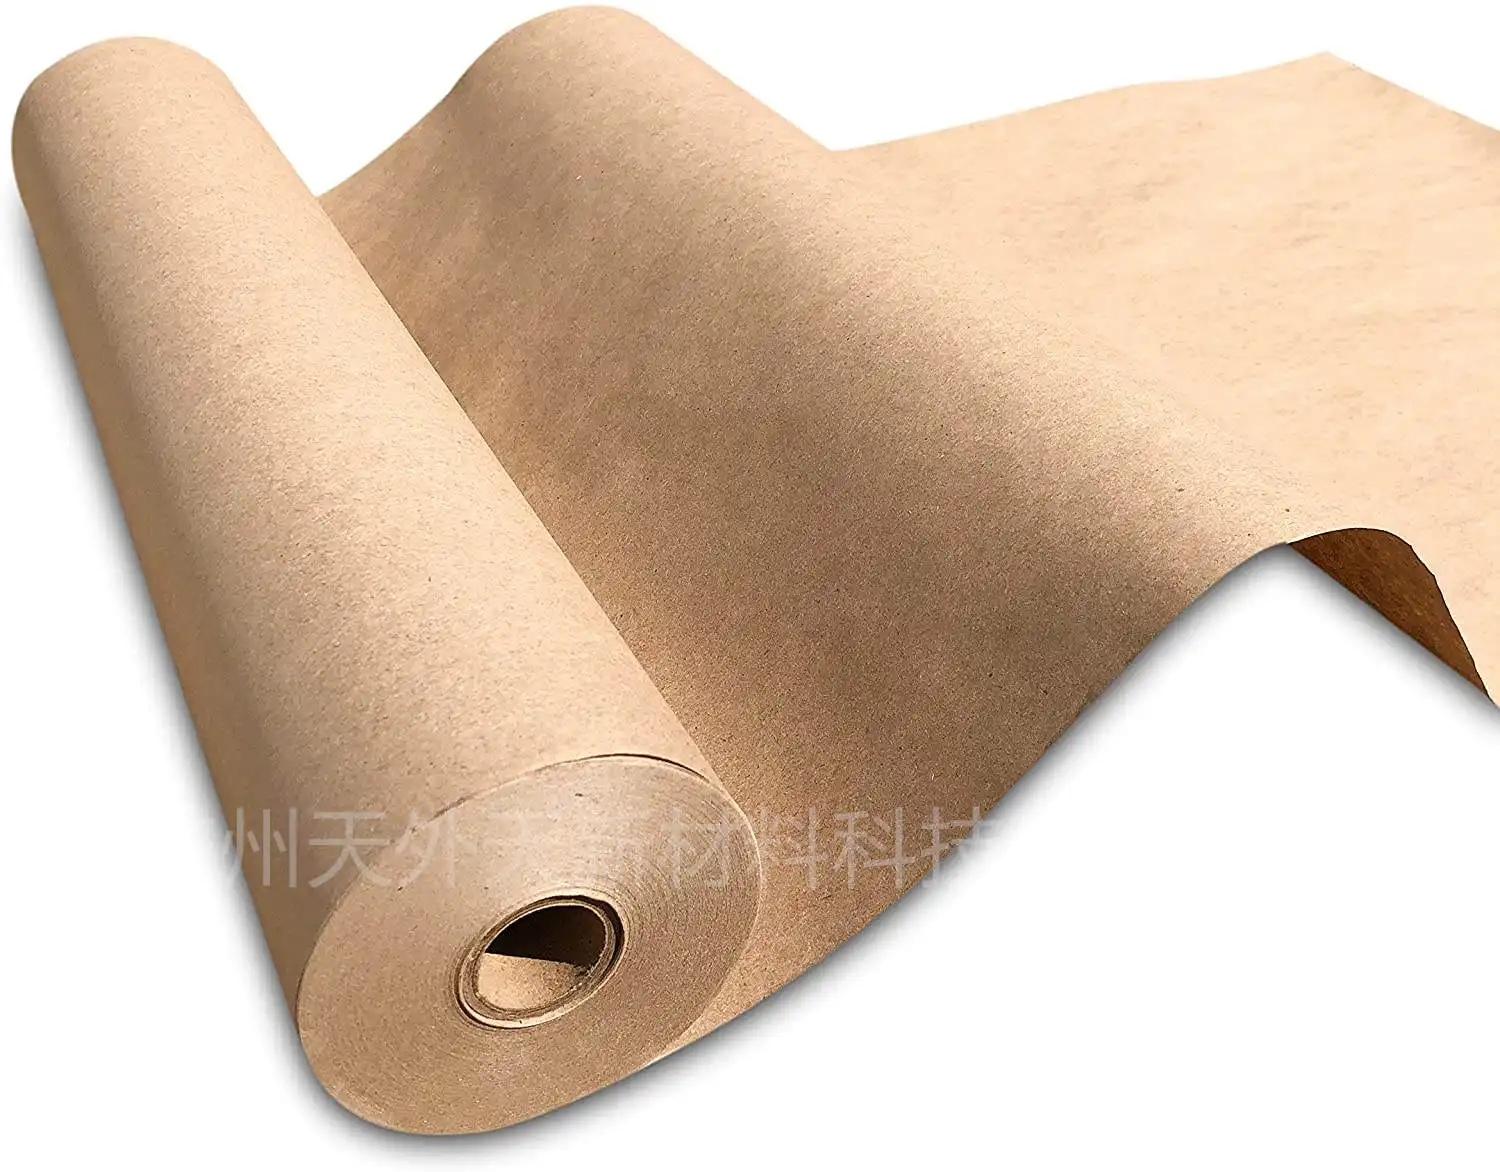 Großhandel biologisch abbaubares Puffer papier Kraft papierrollen für Verpackungs papier